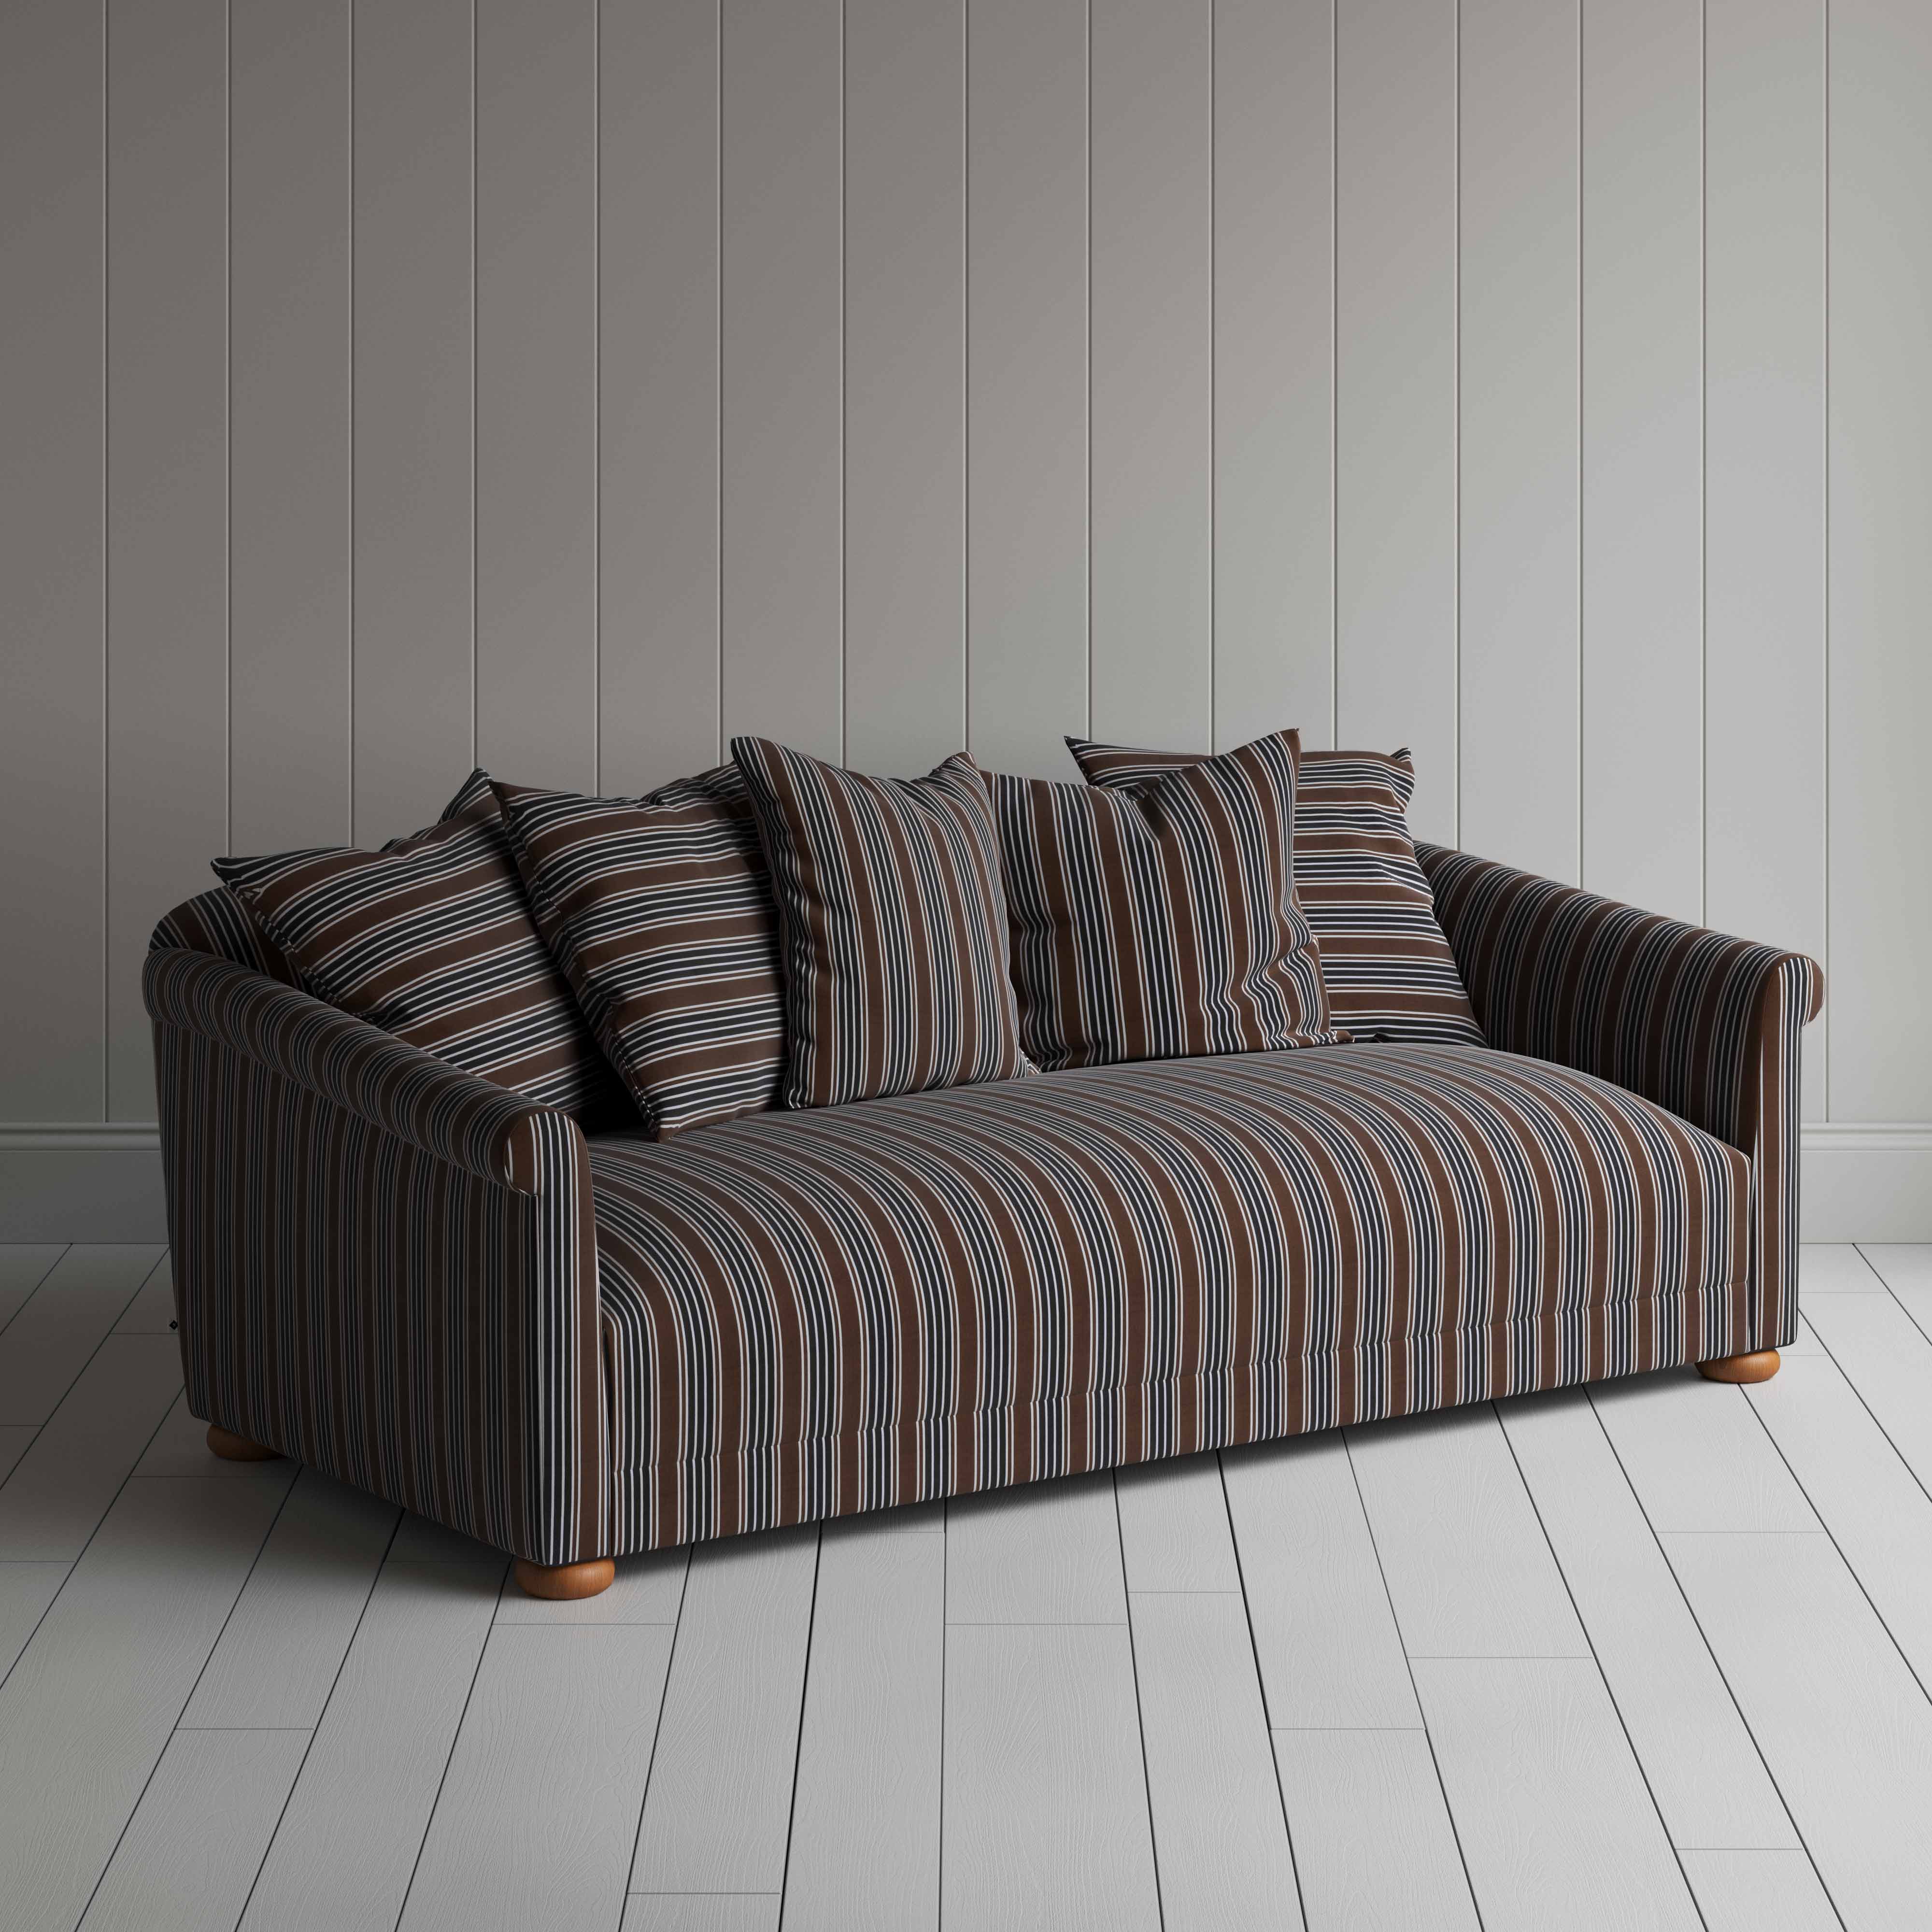  More the Merrier 4 Seater Sofa in Regatta Cotton, Charcoal 